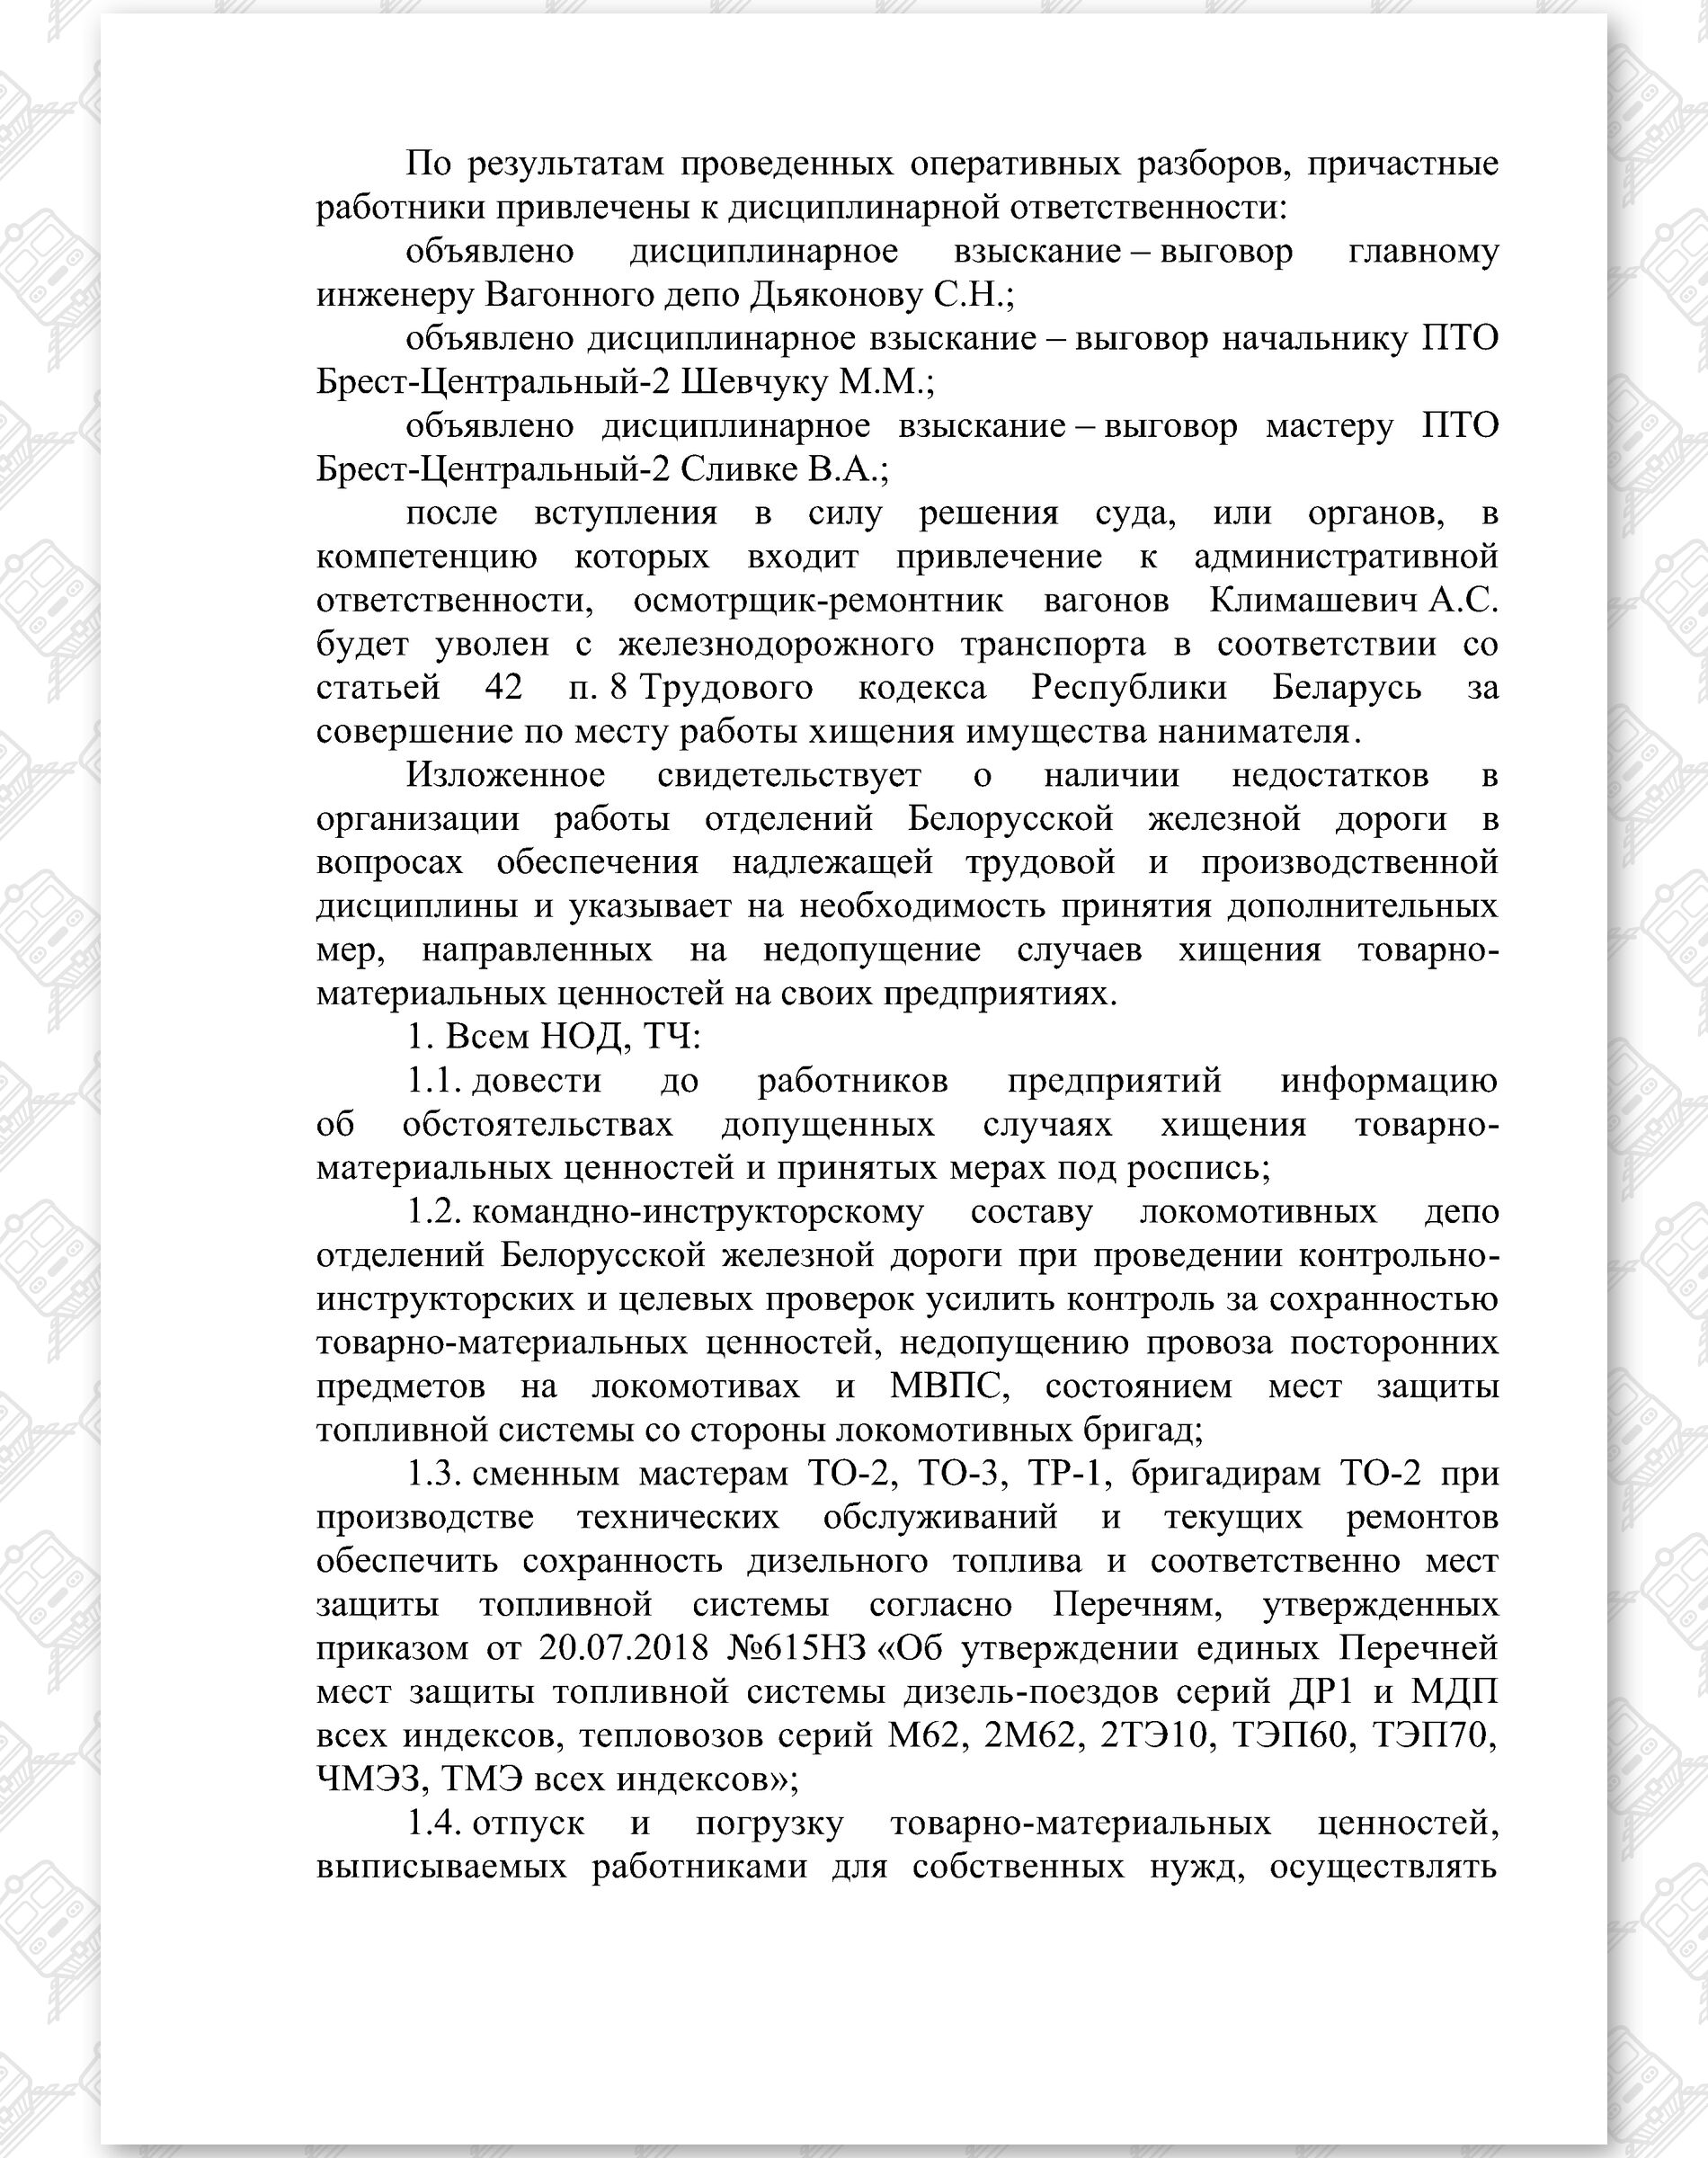 Телеграмма от 17.04.2020 службы локомотивного хозяйства (Страница 3)